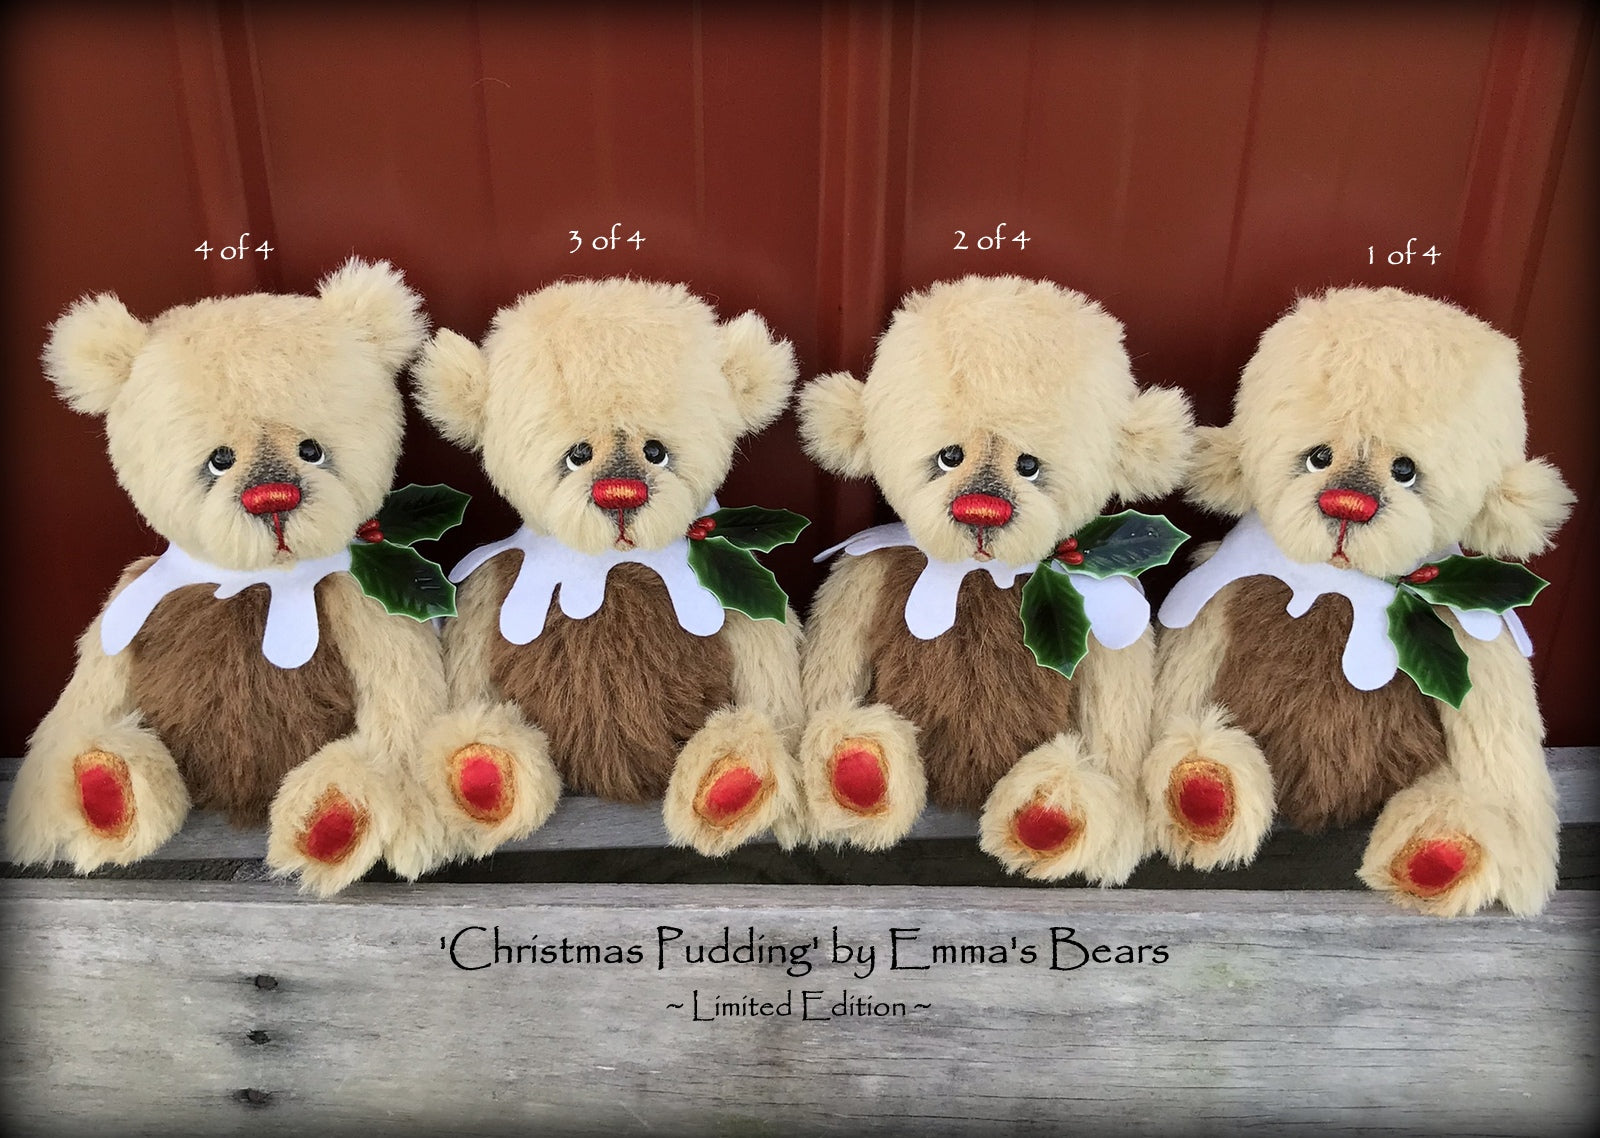 Christmas Pudding L/E 4 of 4 - Handmade ALPACA artist bear by Emma's Bears